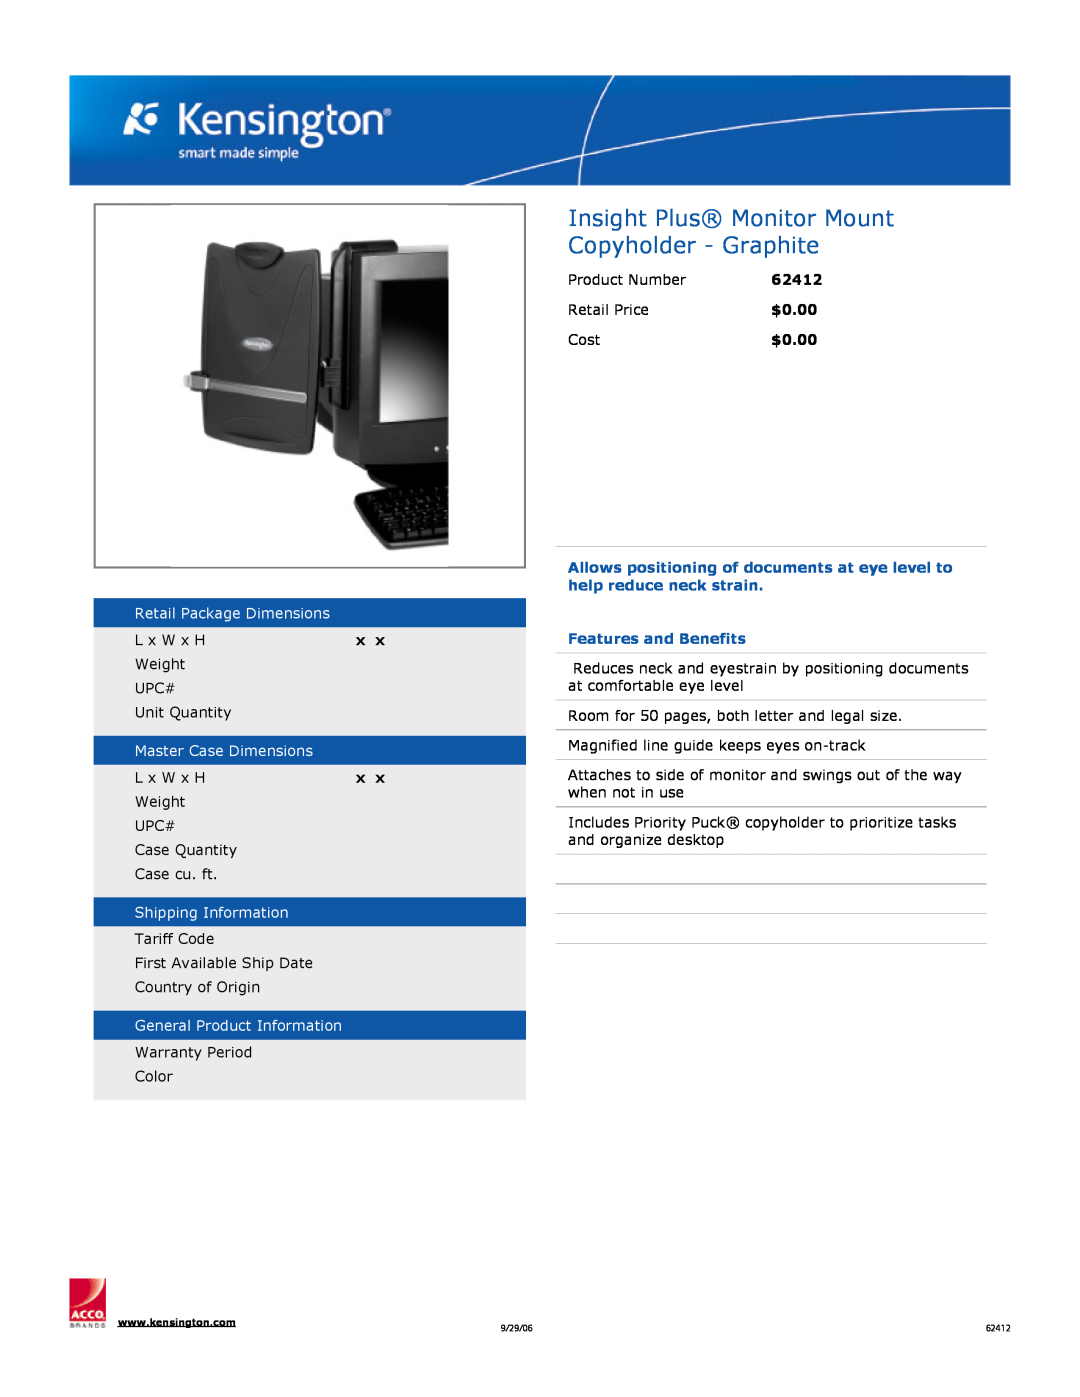 Kensington 62412 dimensions Insight Plus Monitor Mount Copyholder - Graphite, Retail Package Dimensions, $0.00 